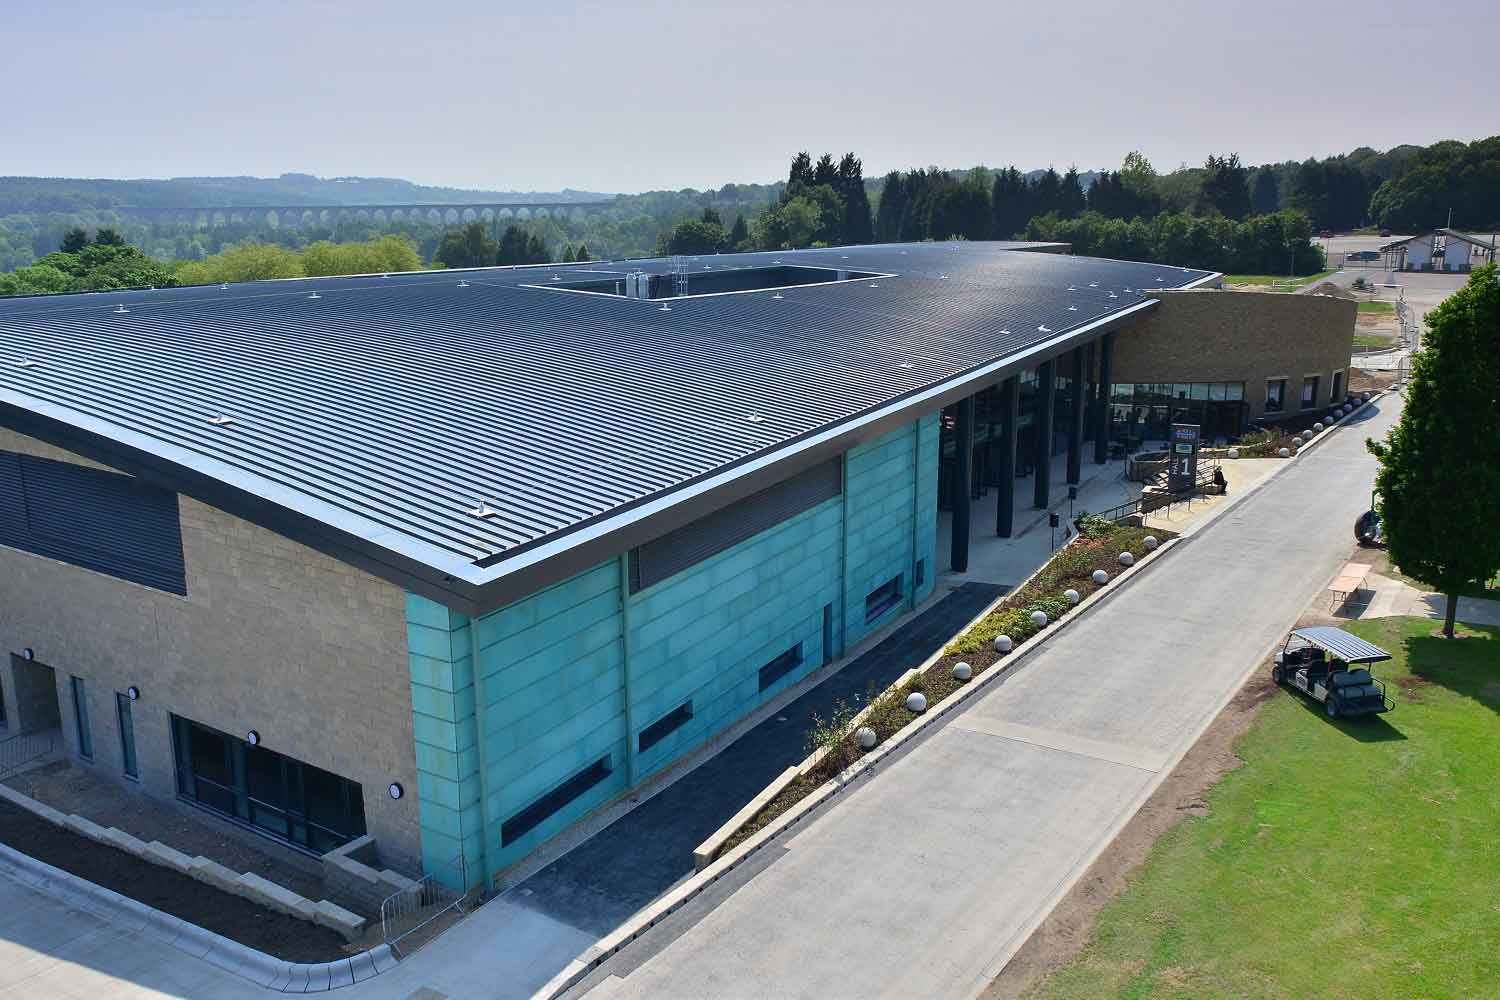 The new Yorkshire Event Centre, Harrogate